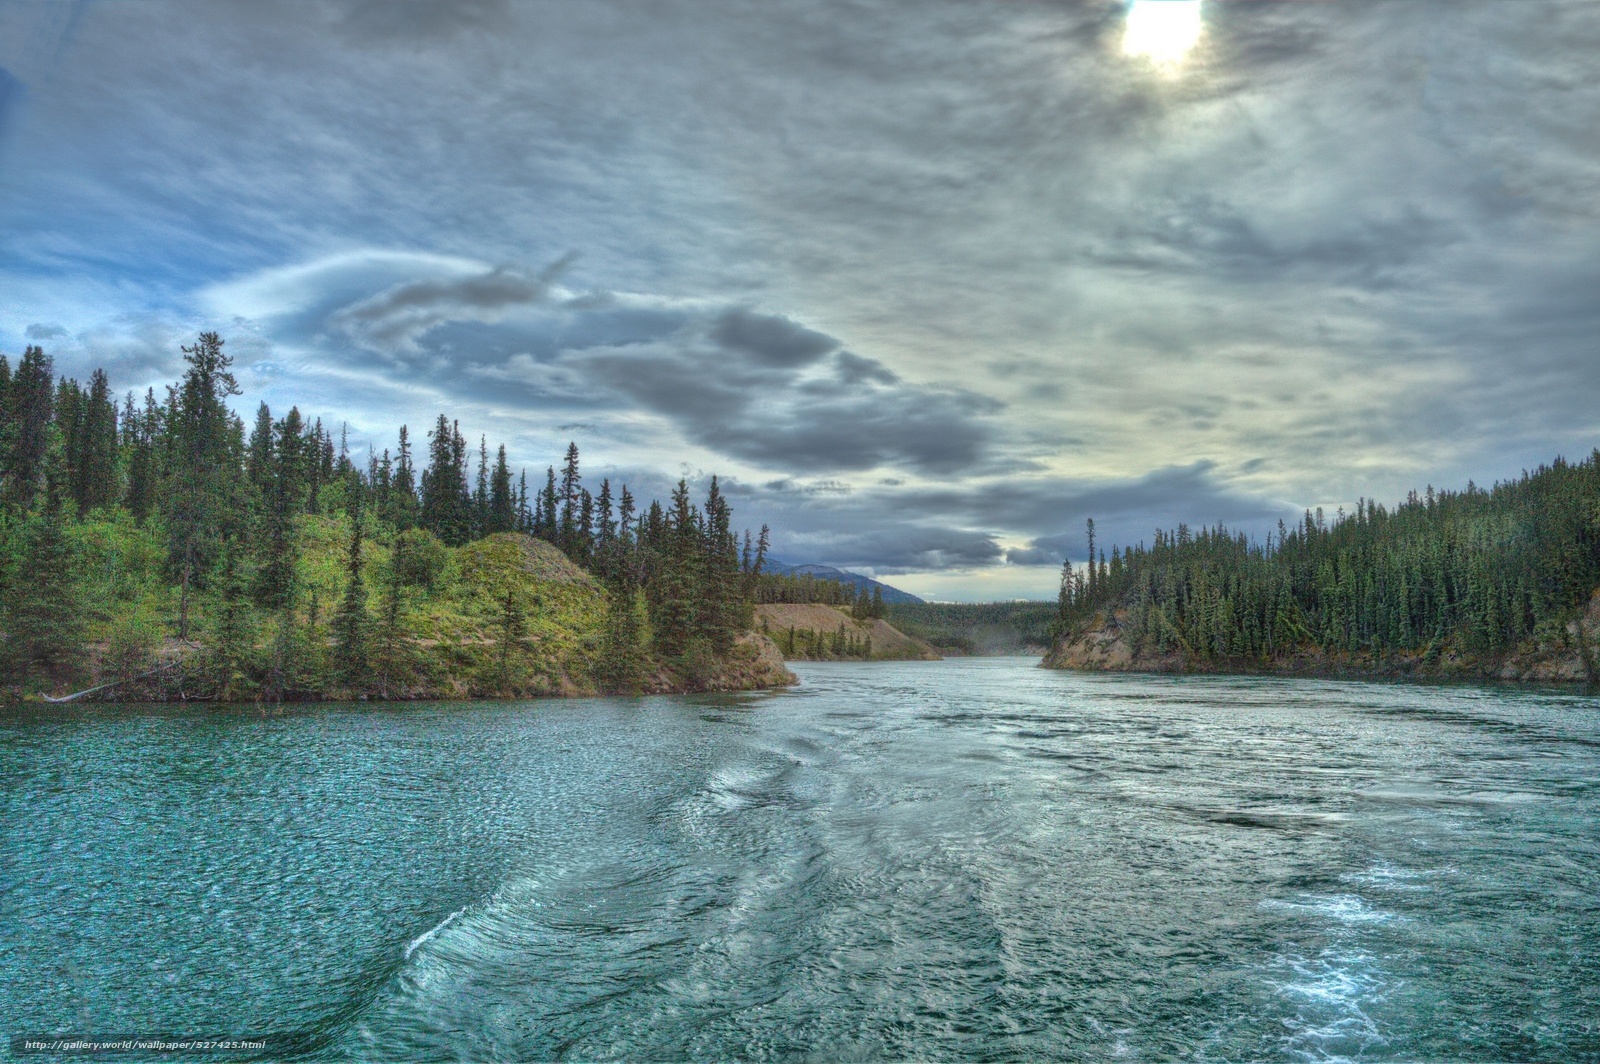 Download wallpaper yukon river canada Yukon River Canada 1600x1064